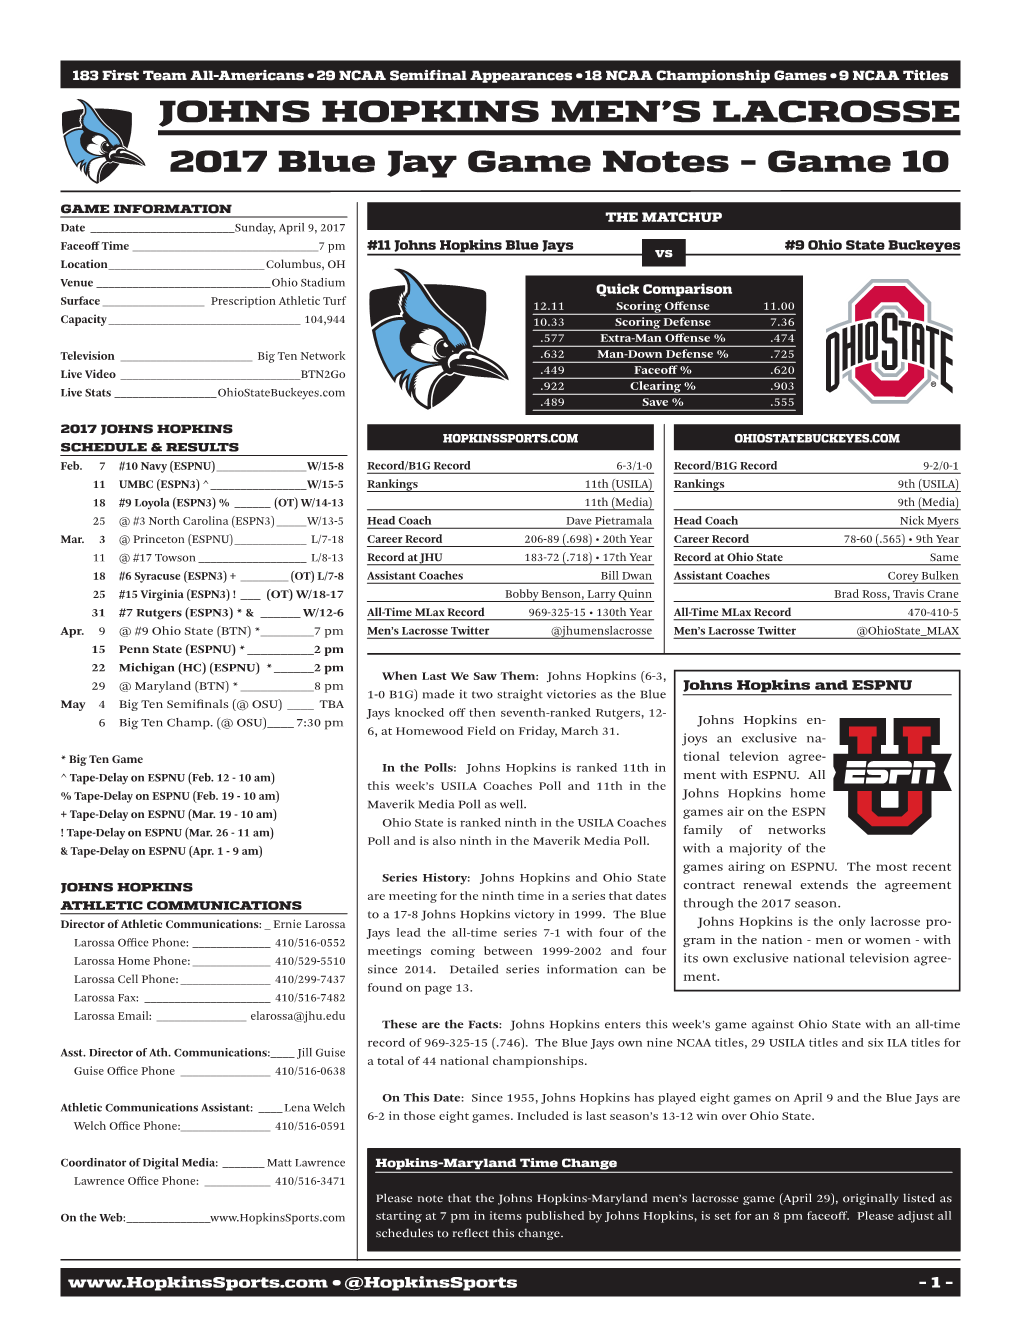 JOHNS HOPKINS MEN's LACROSSE 2017 Blue Jay Game Notes